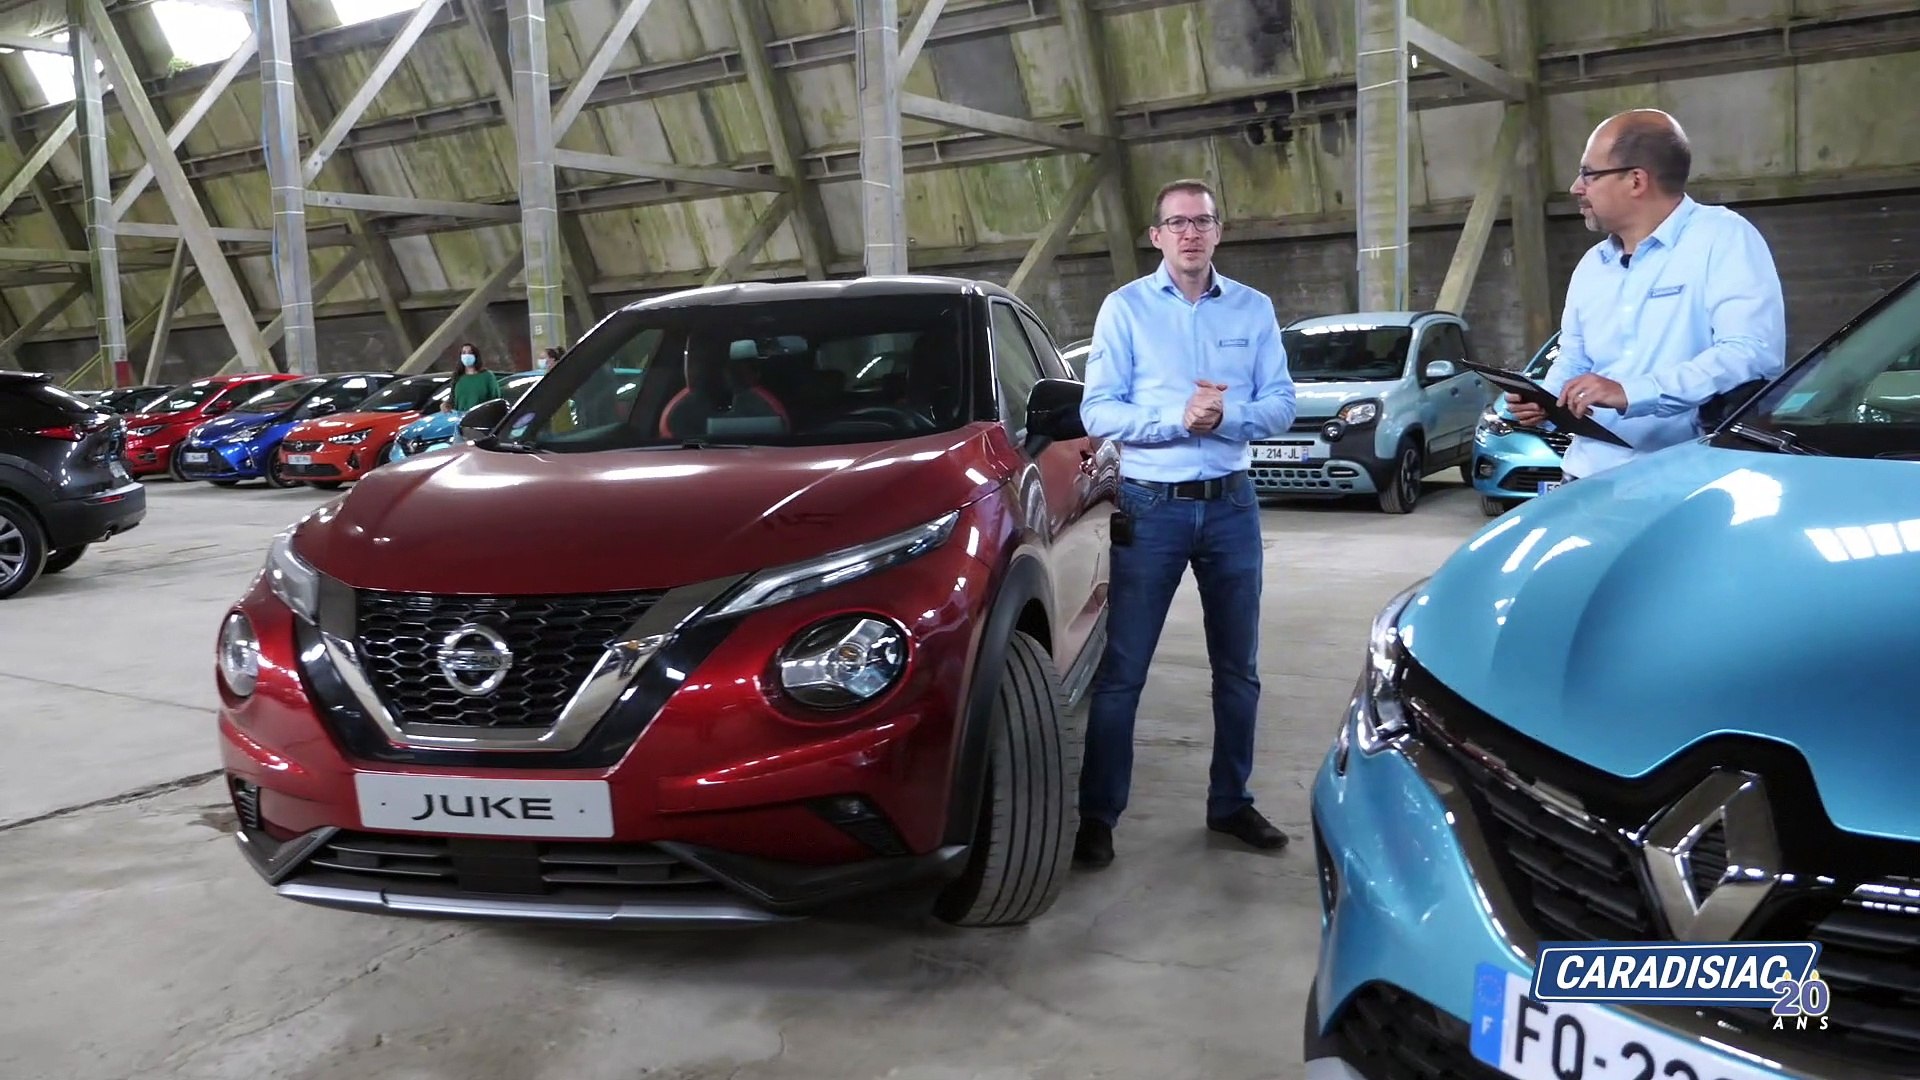 Duel Nissan Juke vs Renault Captur - Salon de l'auto Caradisiac 2020 -  Vidéo Dailymotion